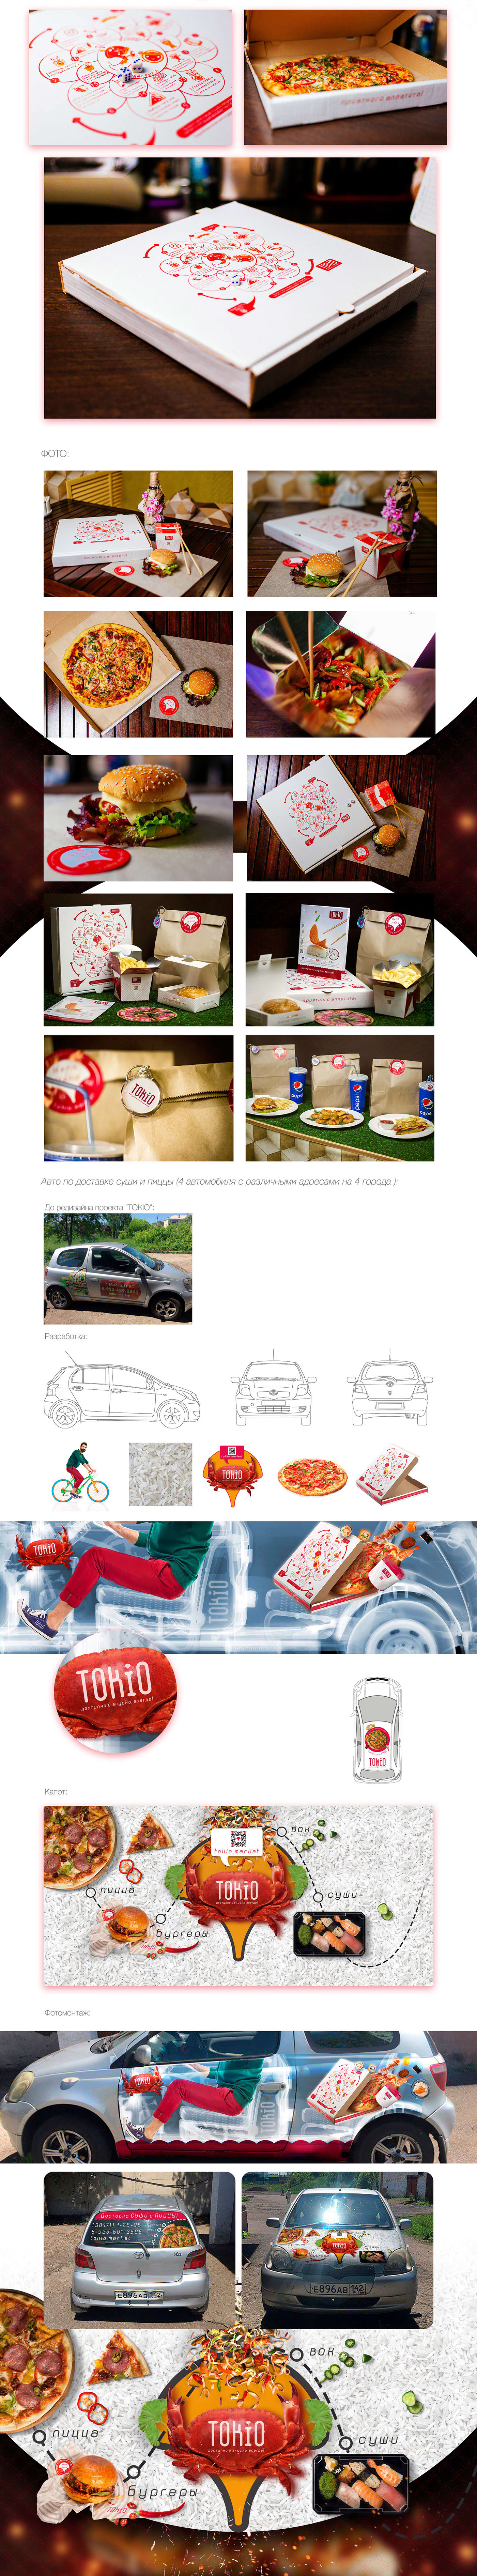 Sushi Pizza Auto tokio menu delivery free mockup  free download wok packing